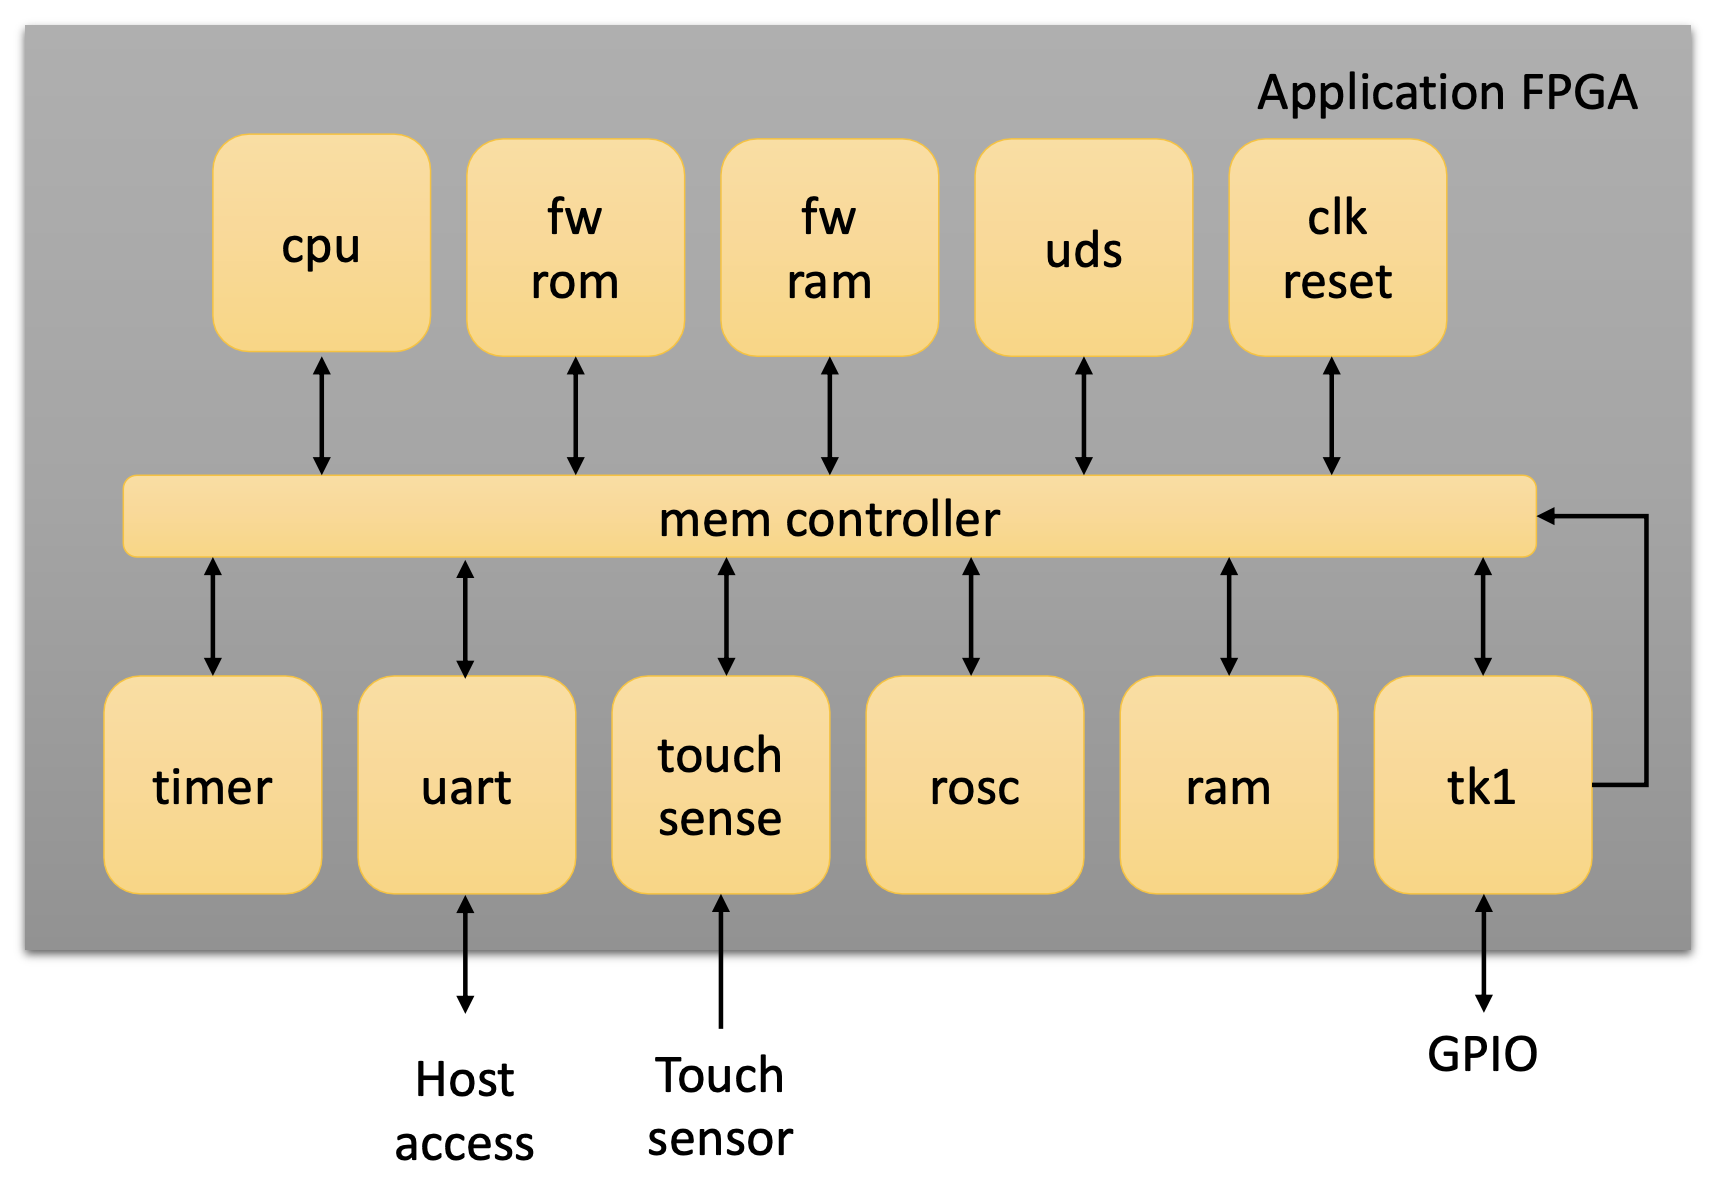 The Application FPGA block diagram